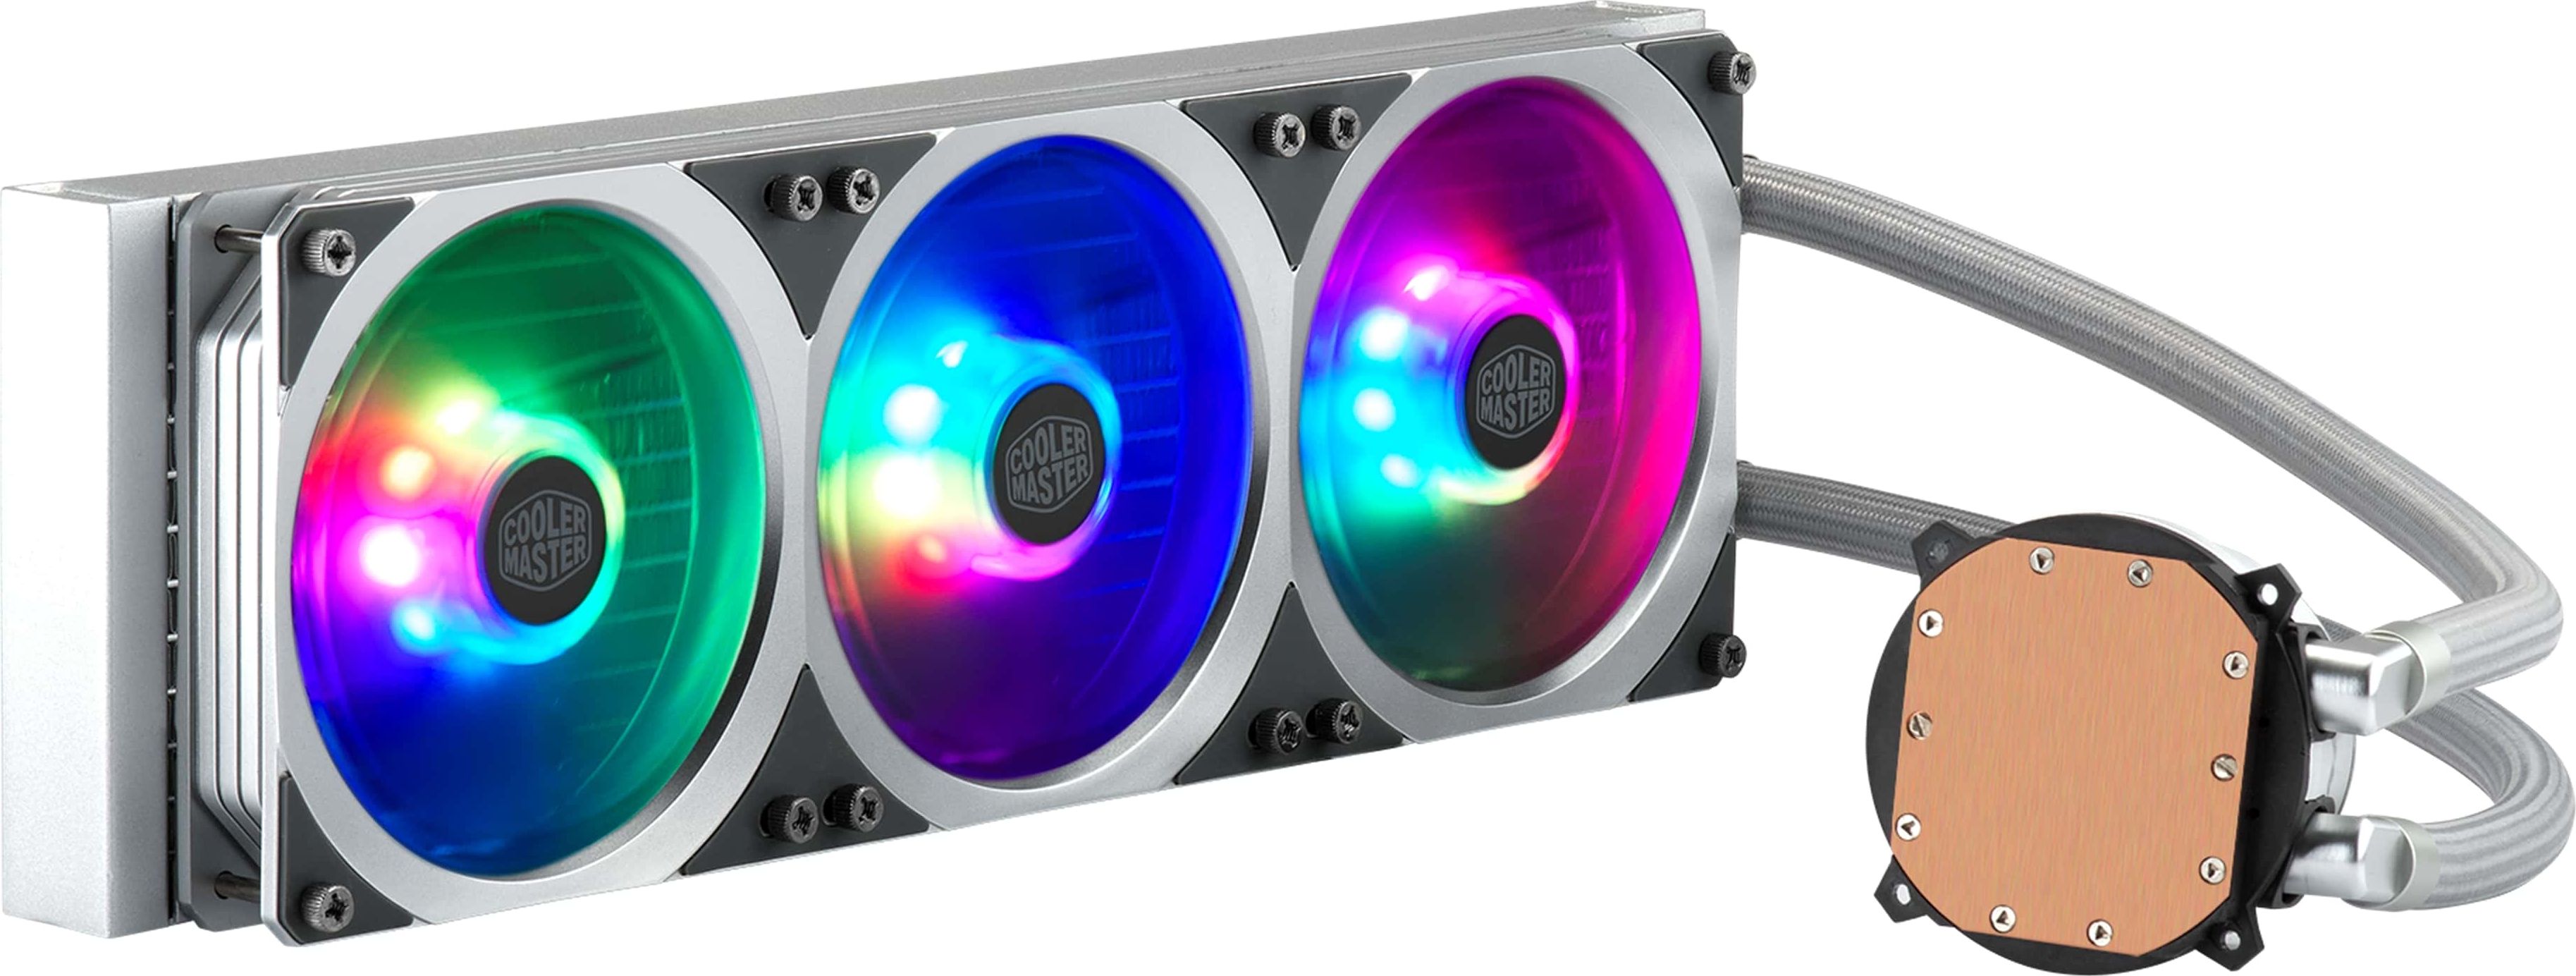 Coolere Procesor - Cooler procesor Cooler Master MasterLiquid ML360P Silver ARGB Water AMD/INTEL